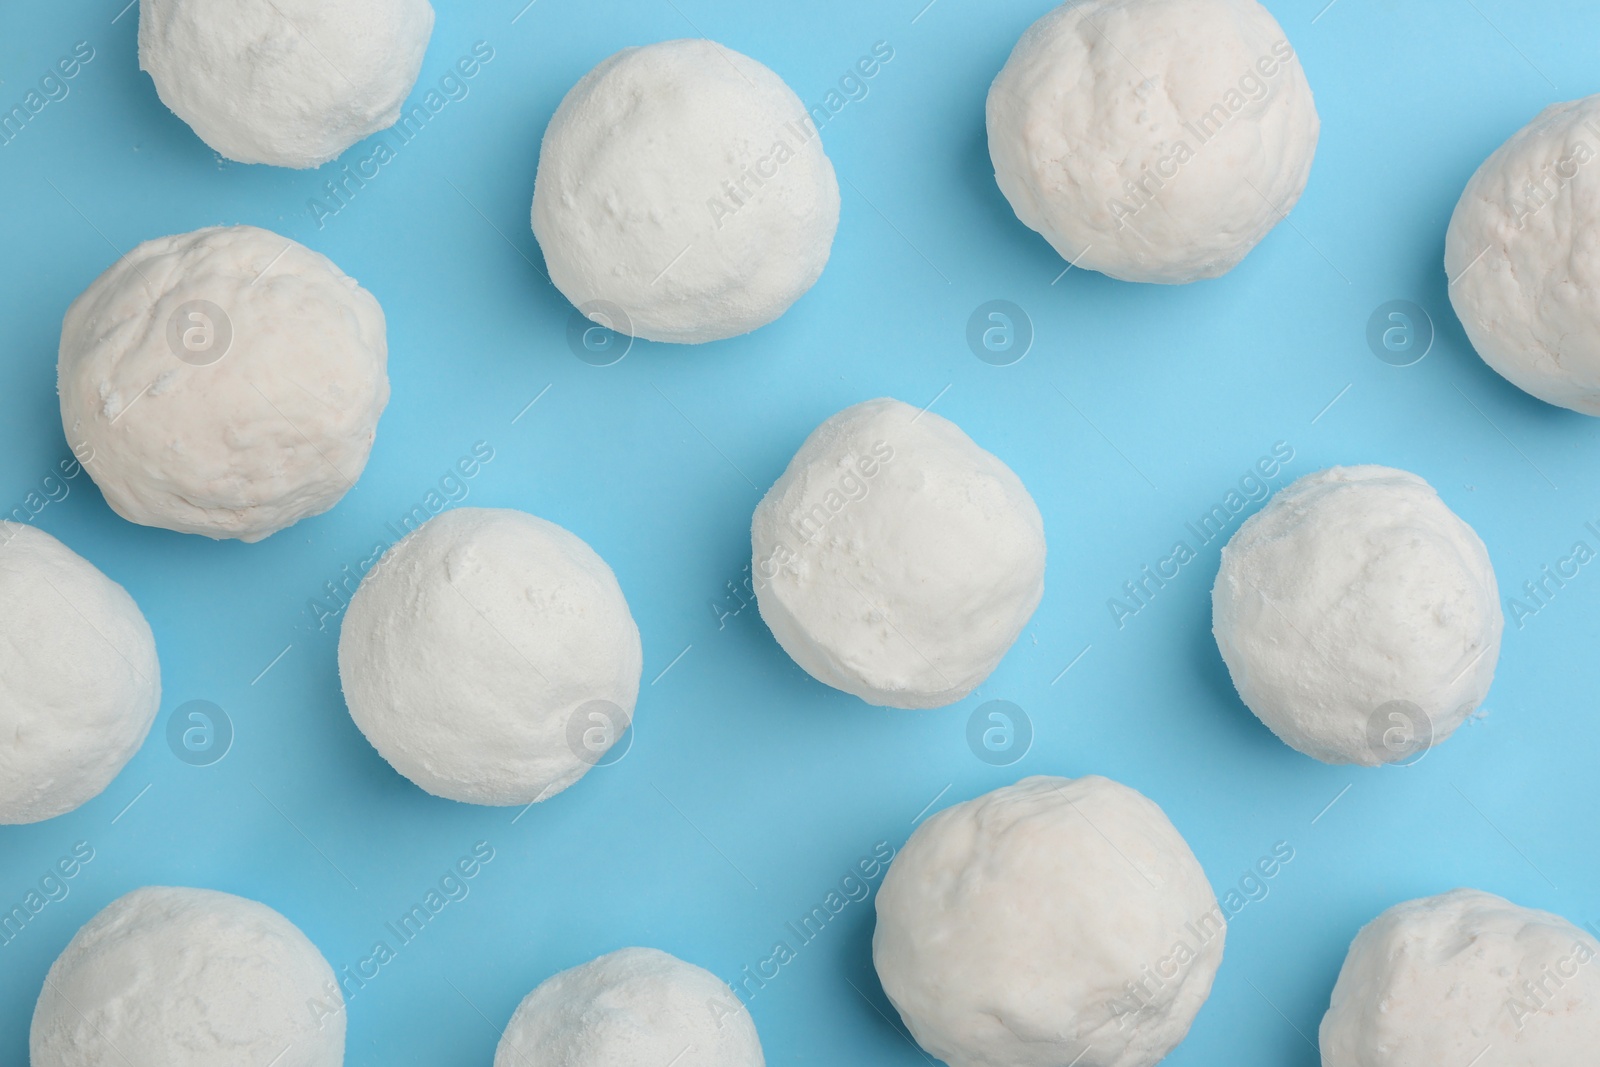 Photo of Round snowballs on light blue background, flat lay